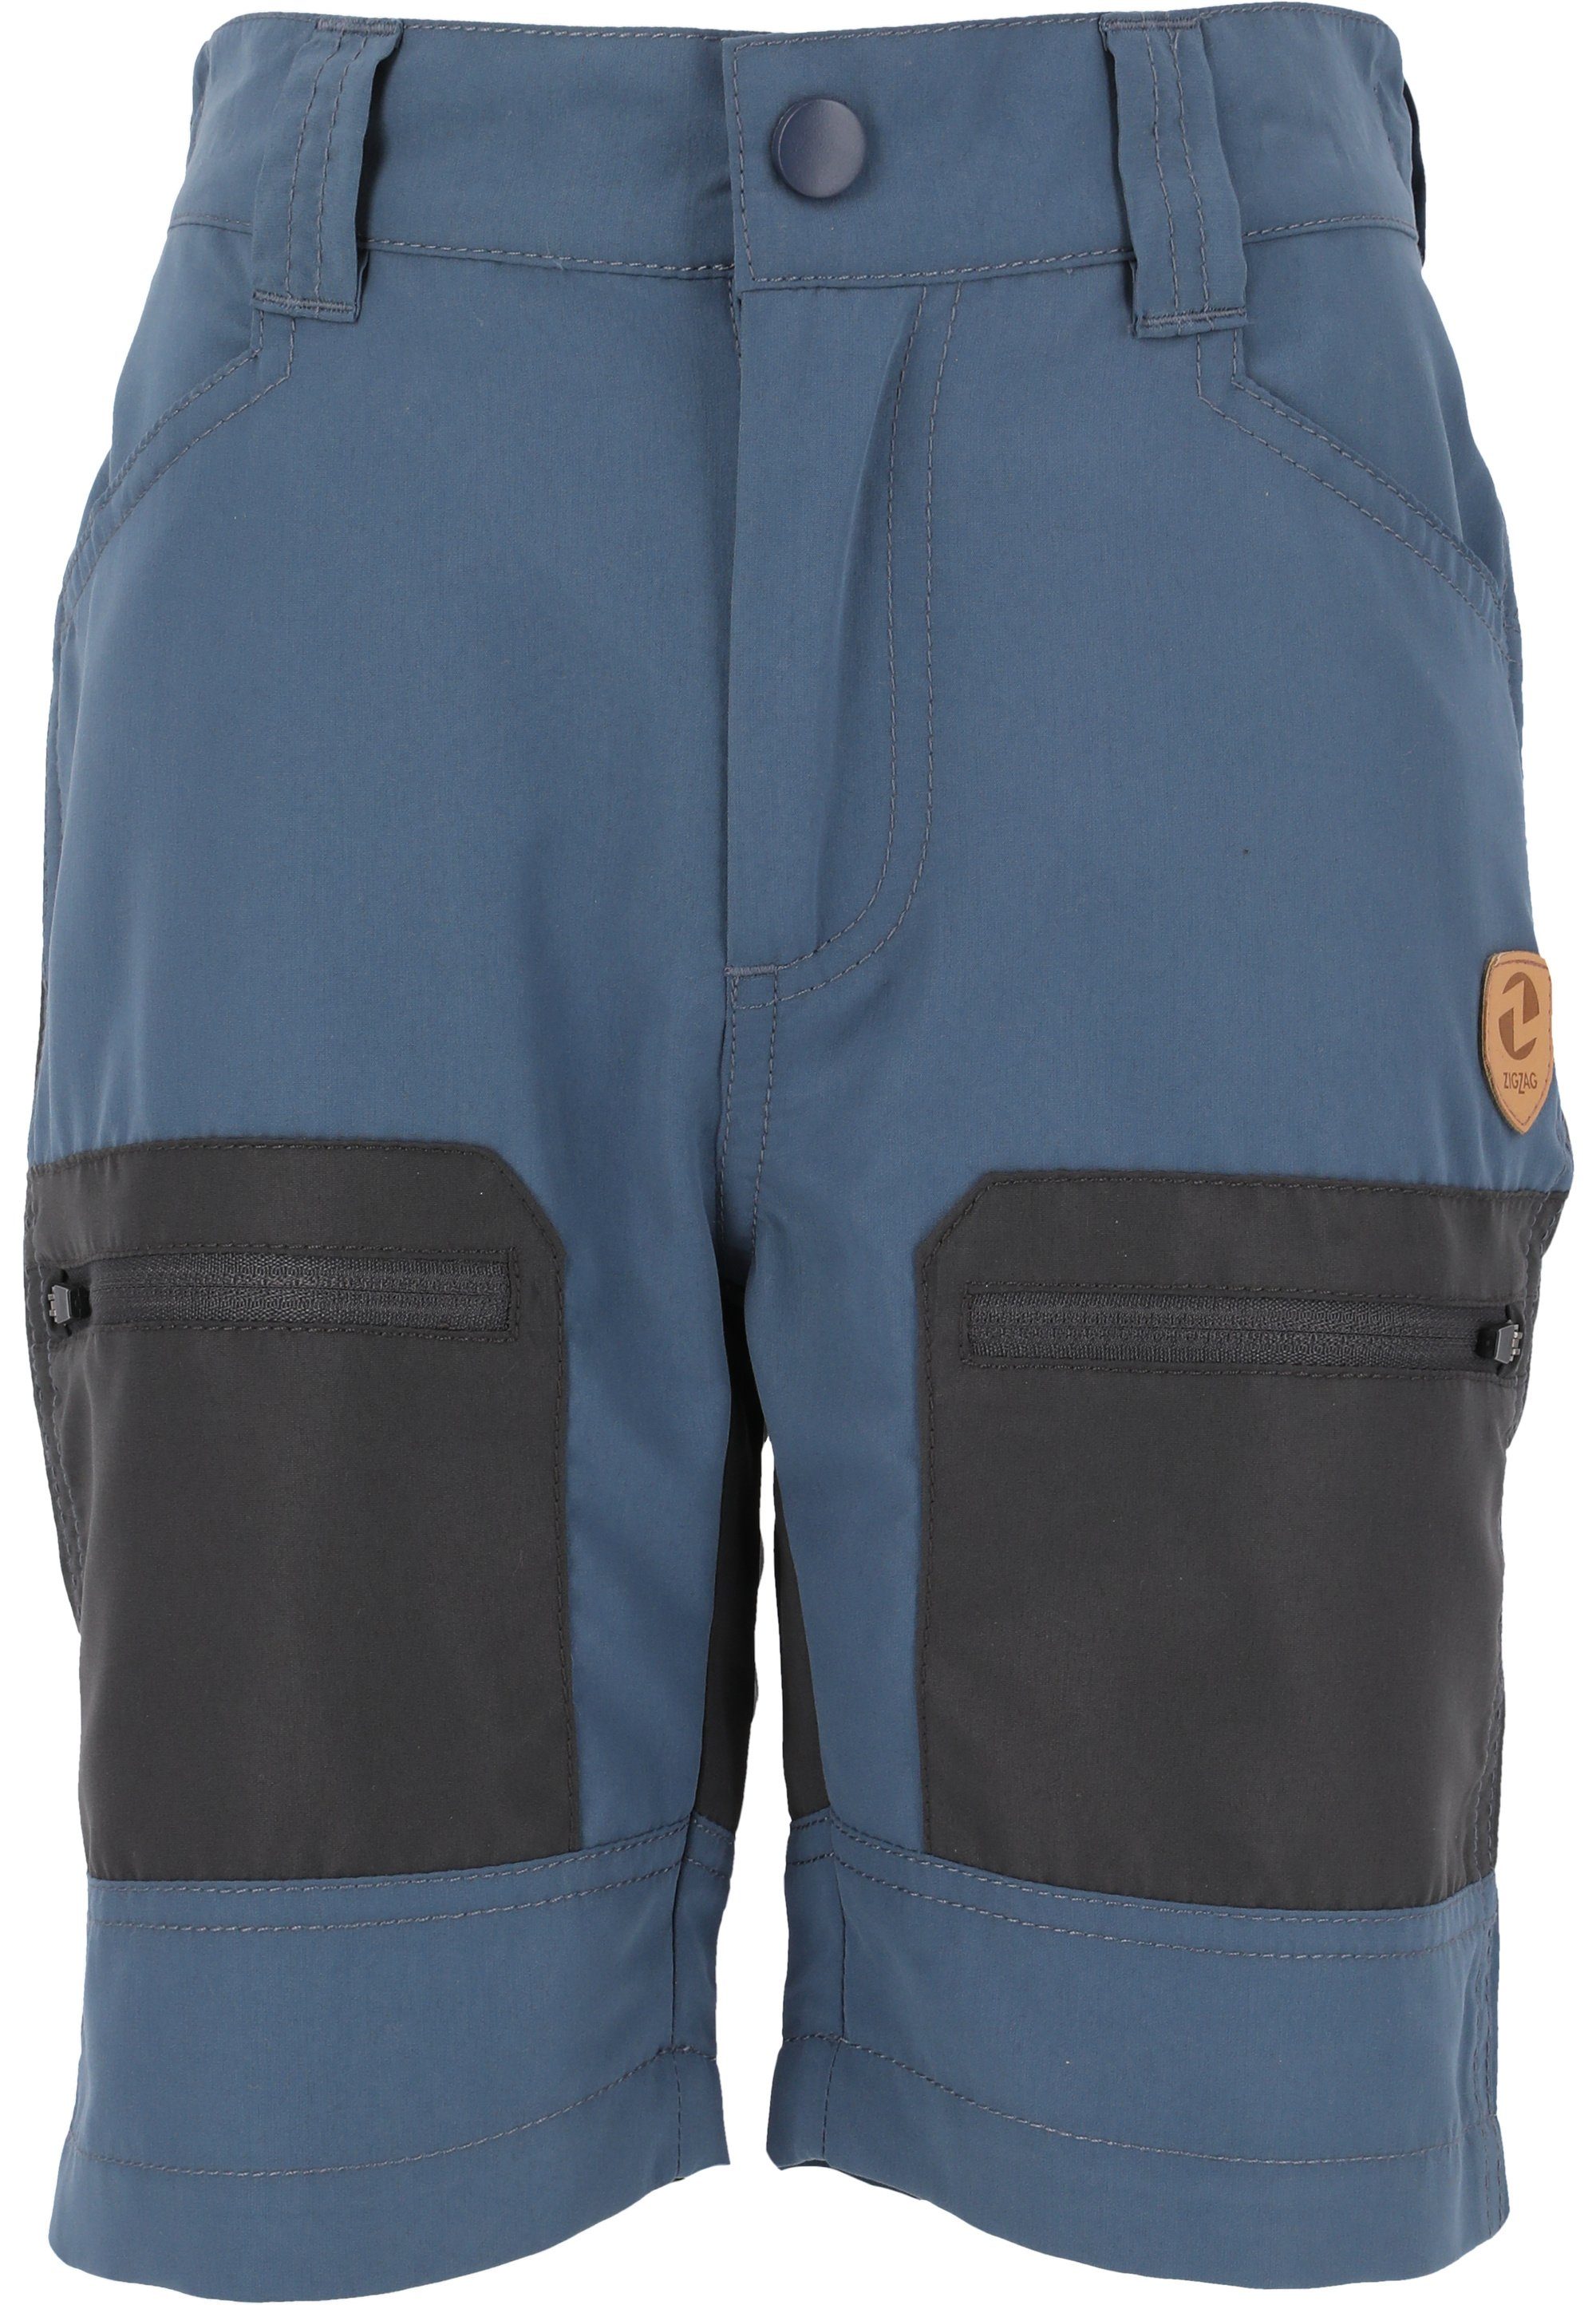 robustem Atlantic Shorts Material ZIGZAG blau-schwarz aus